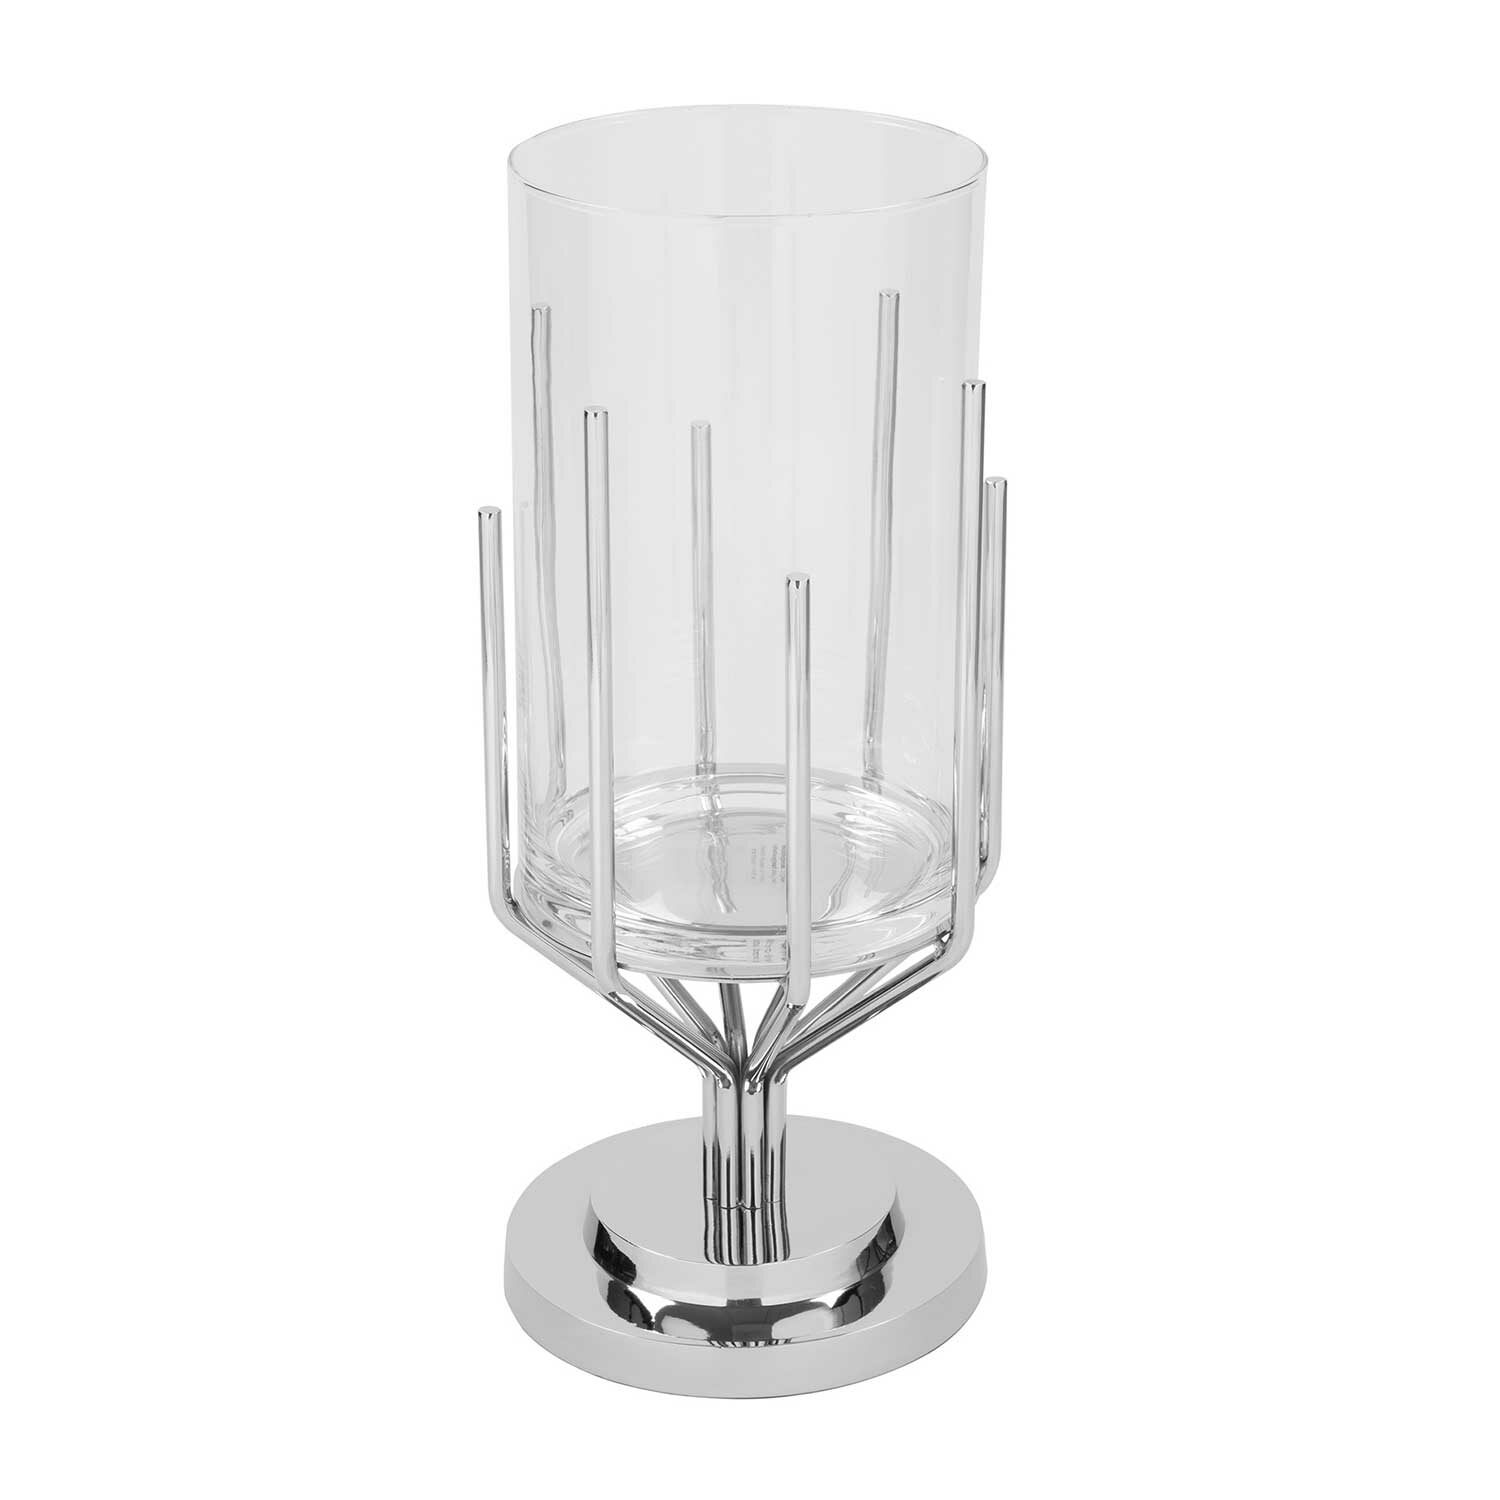 LUXOR wind light vase